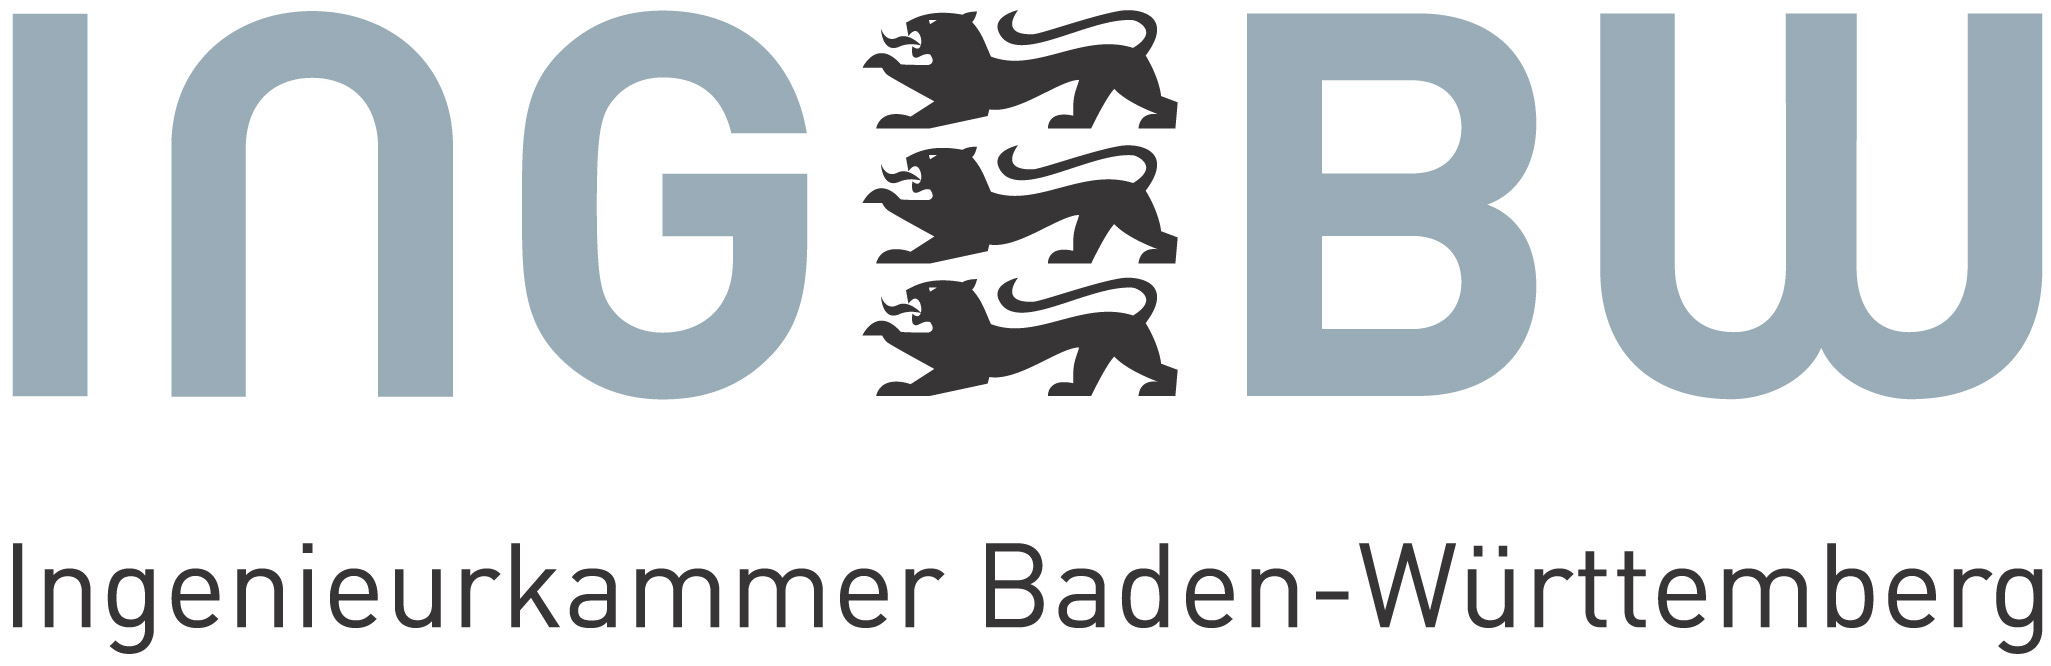 Ingenieurkammer Baden-Württemberg